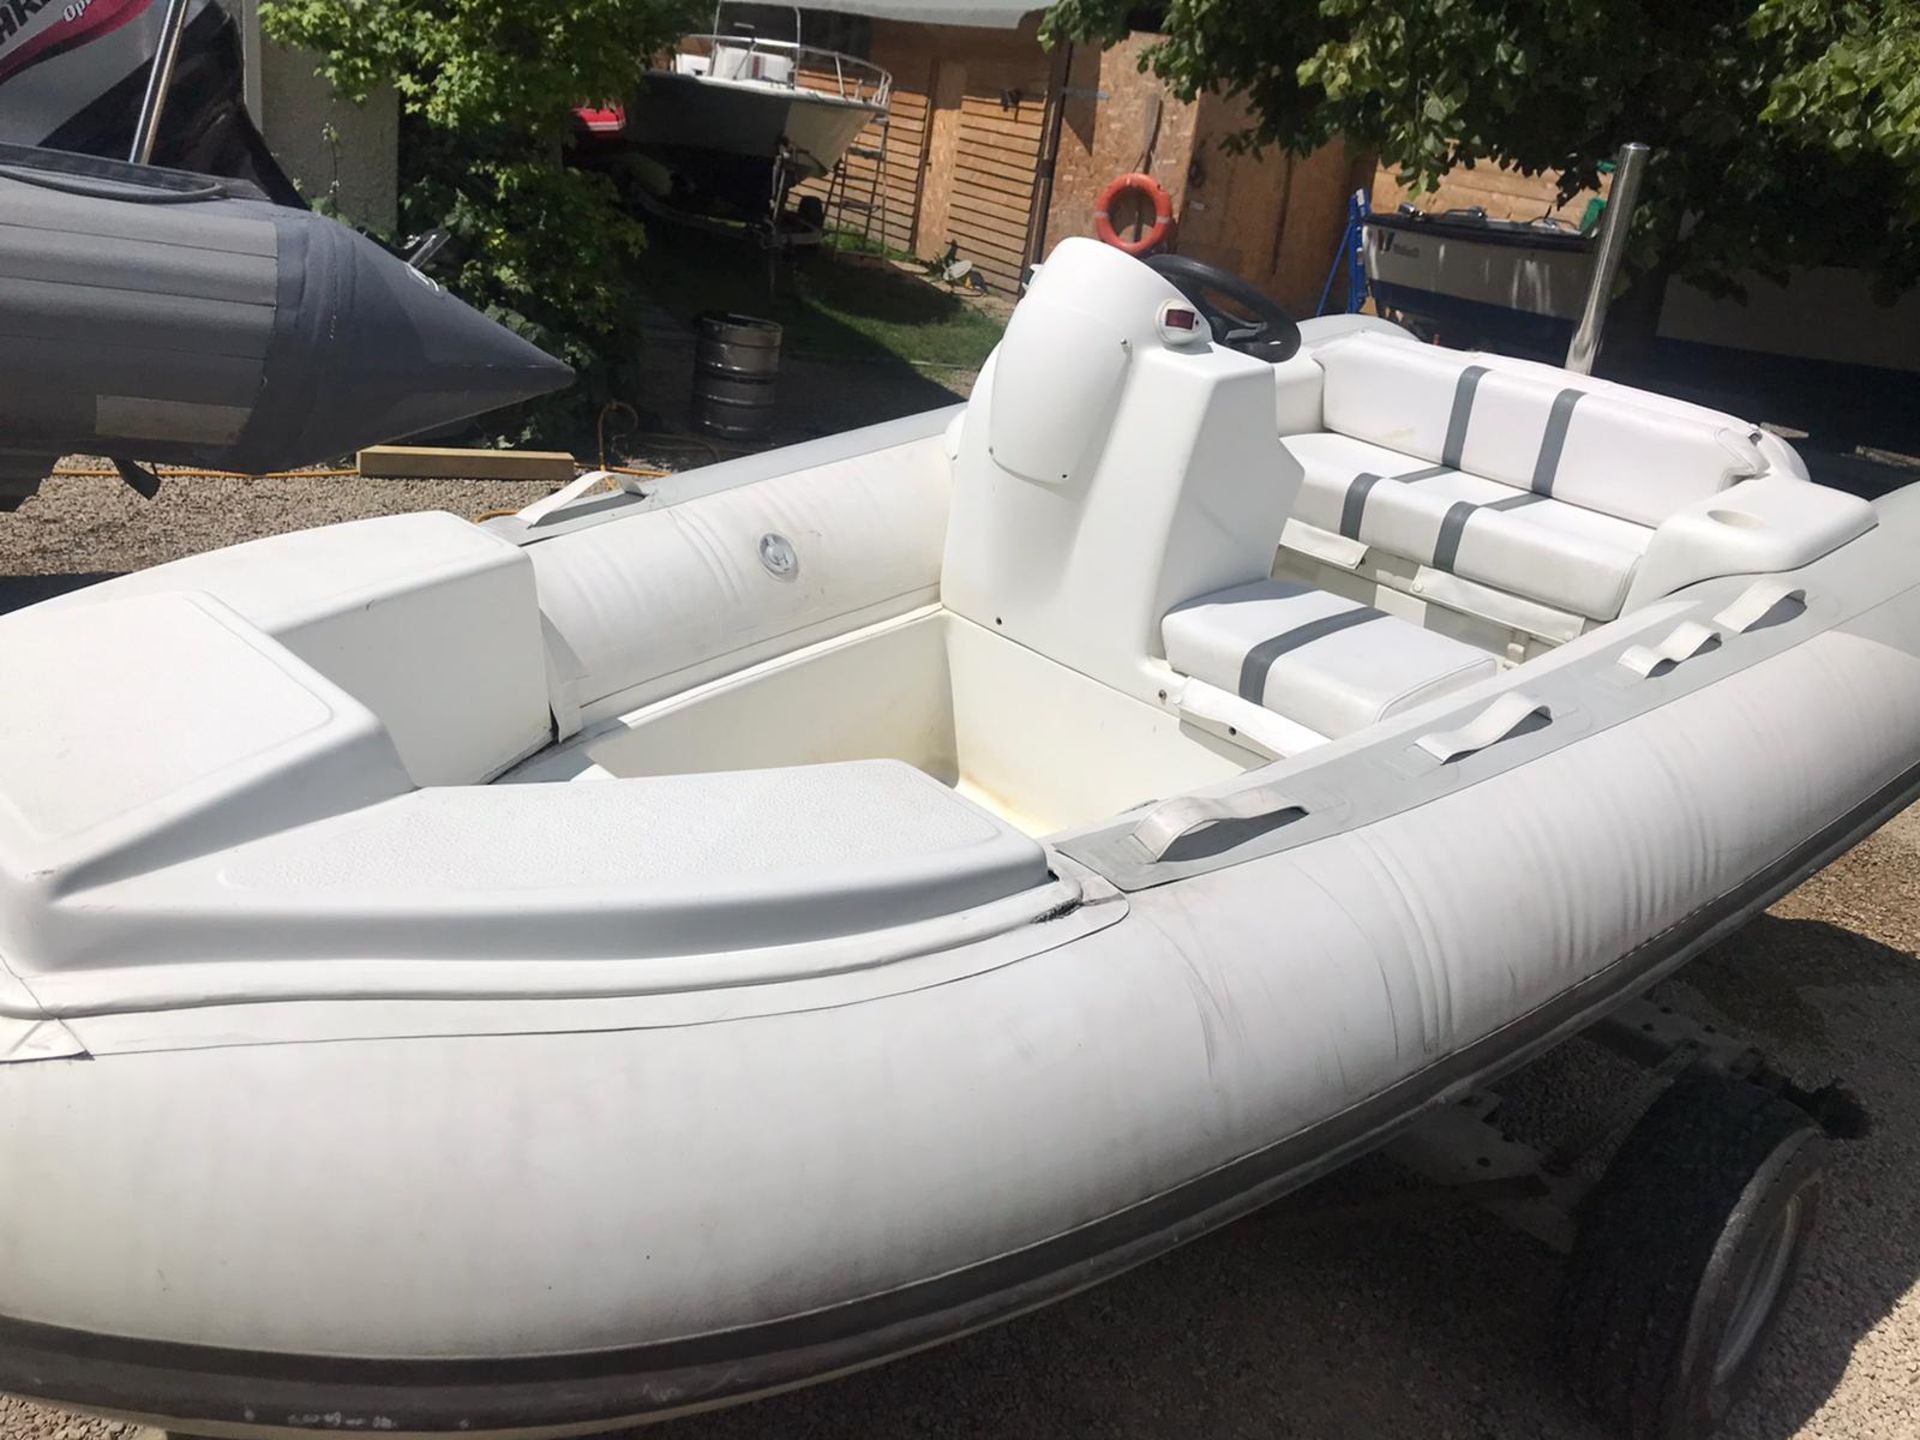 DLX 371 Rigid Inflatable Boat Rib - Image 2 of 3